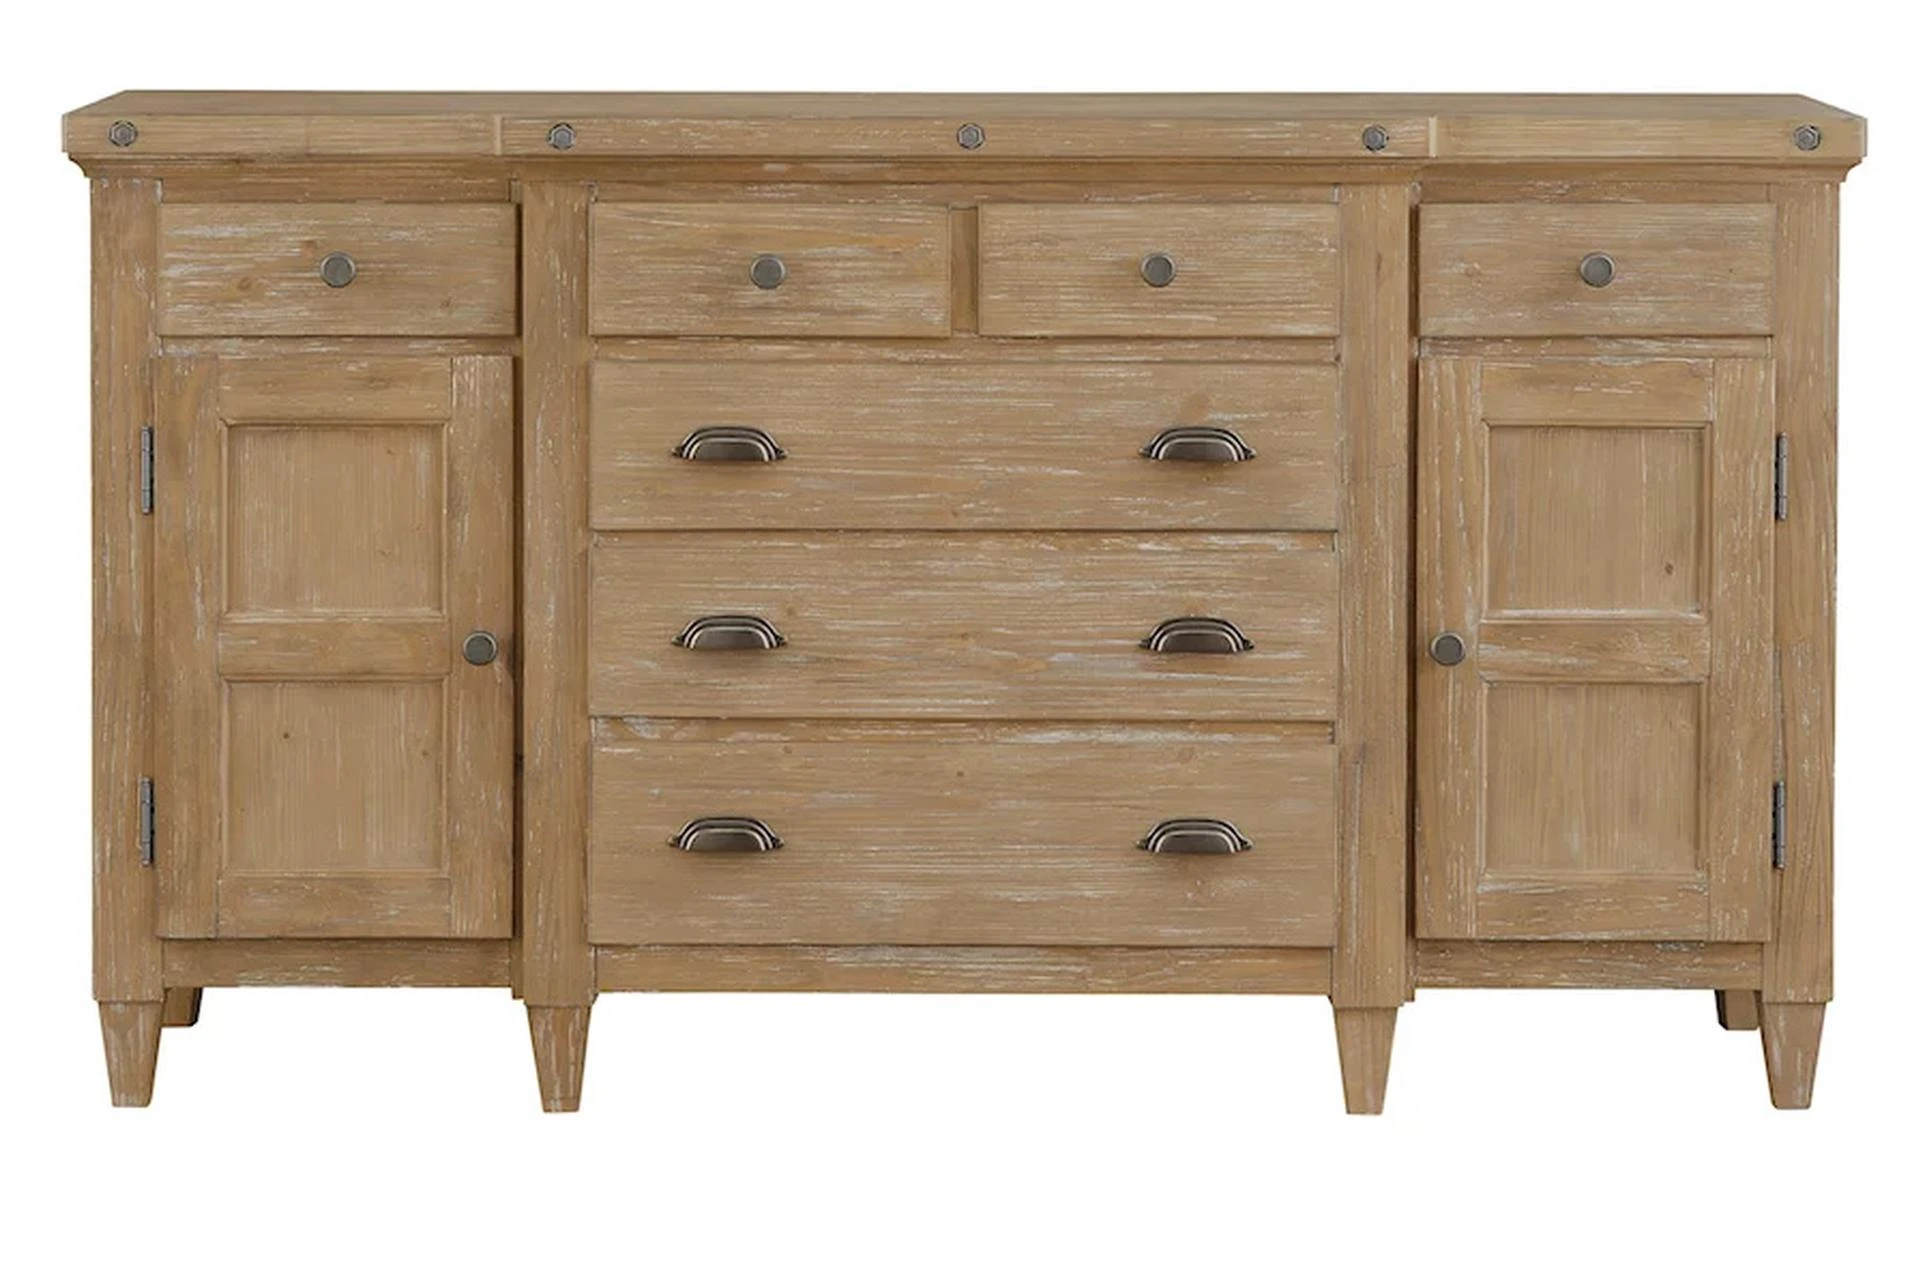 ELOISE 6-drawer dresser made in Canada in birch wood